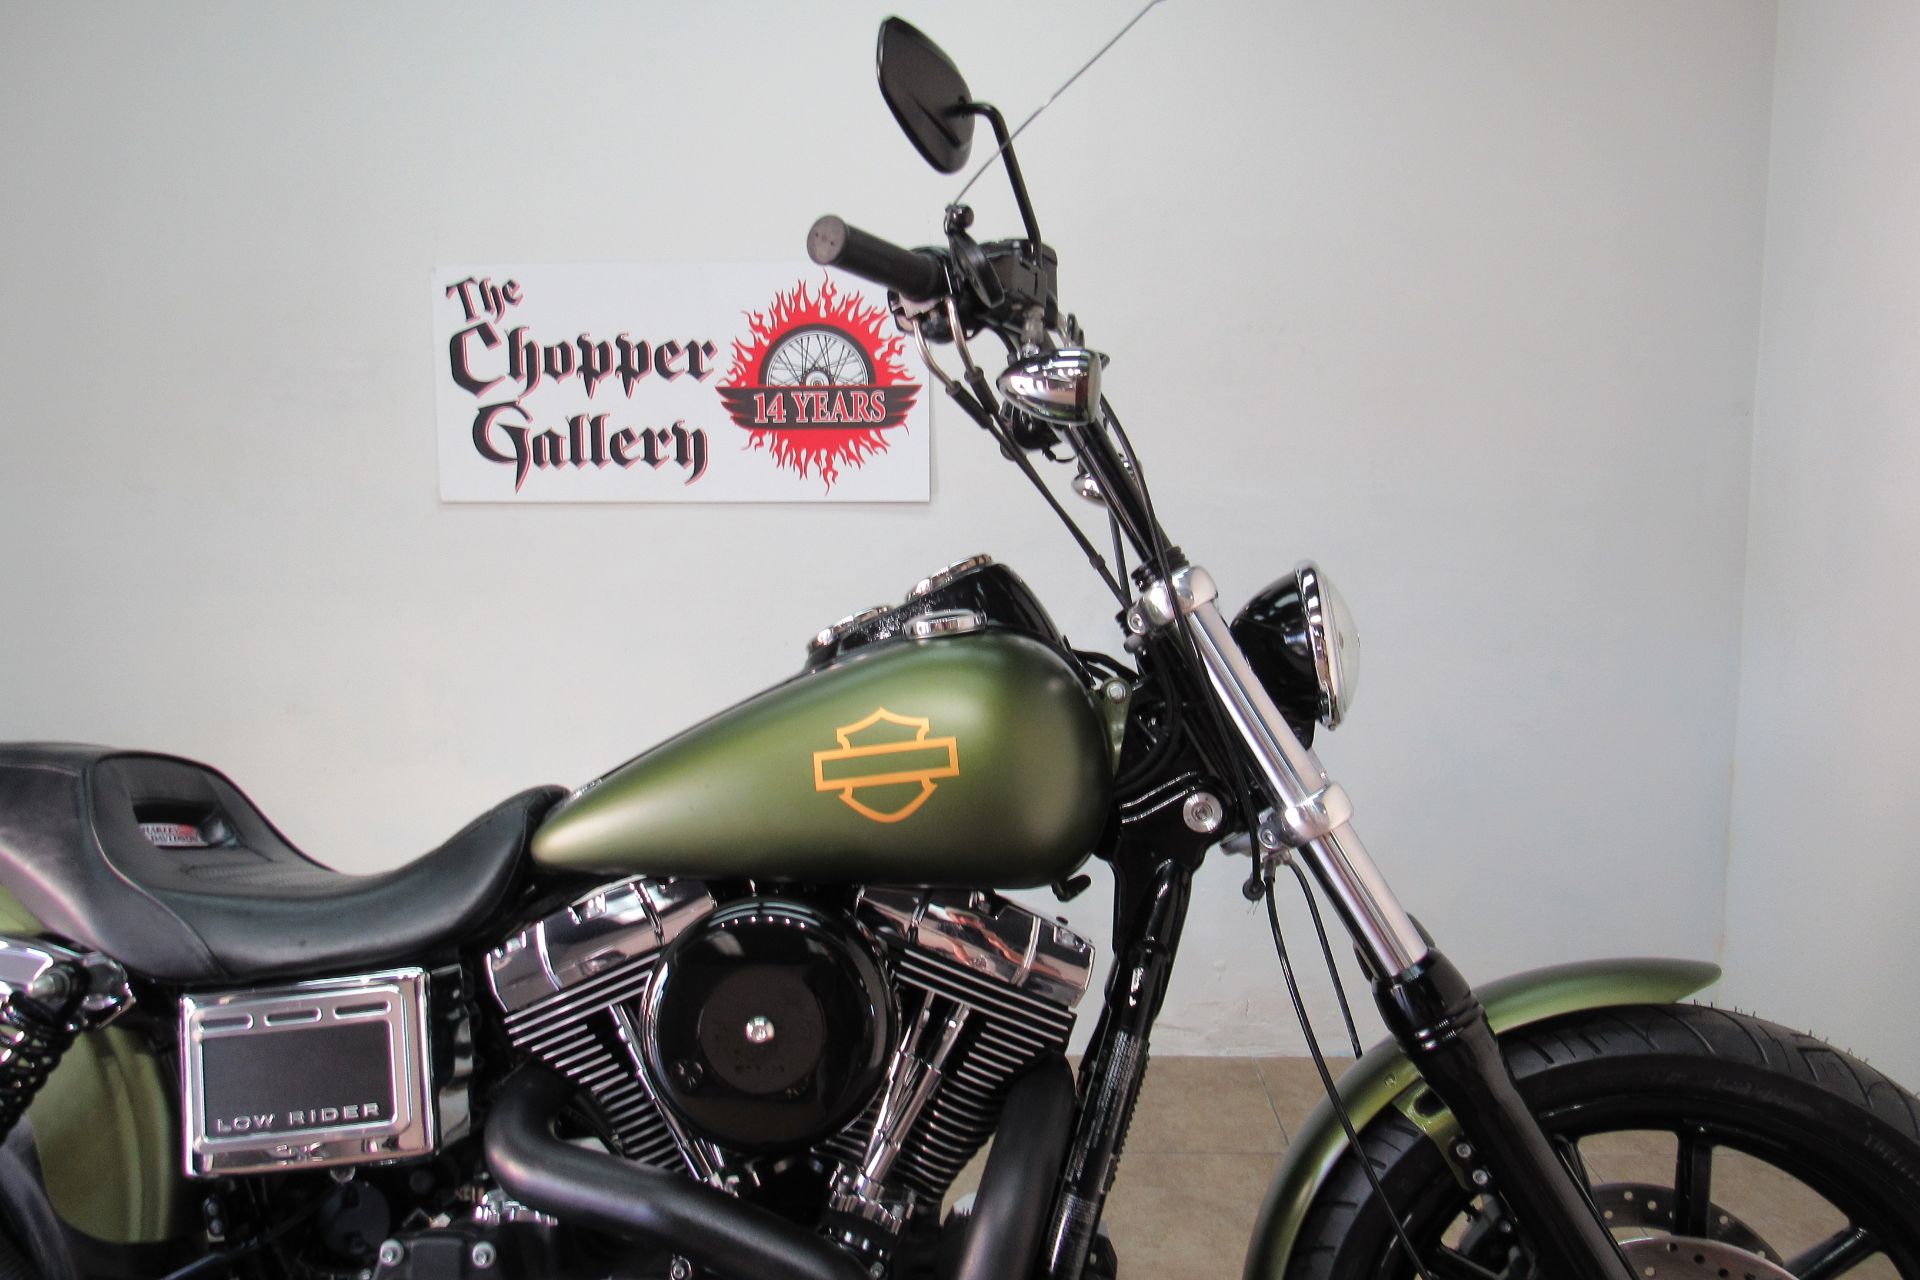 2014 Harley-Davidson Low Rider® in Temecula, California - Photo 9